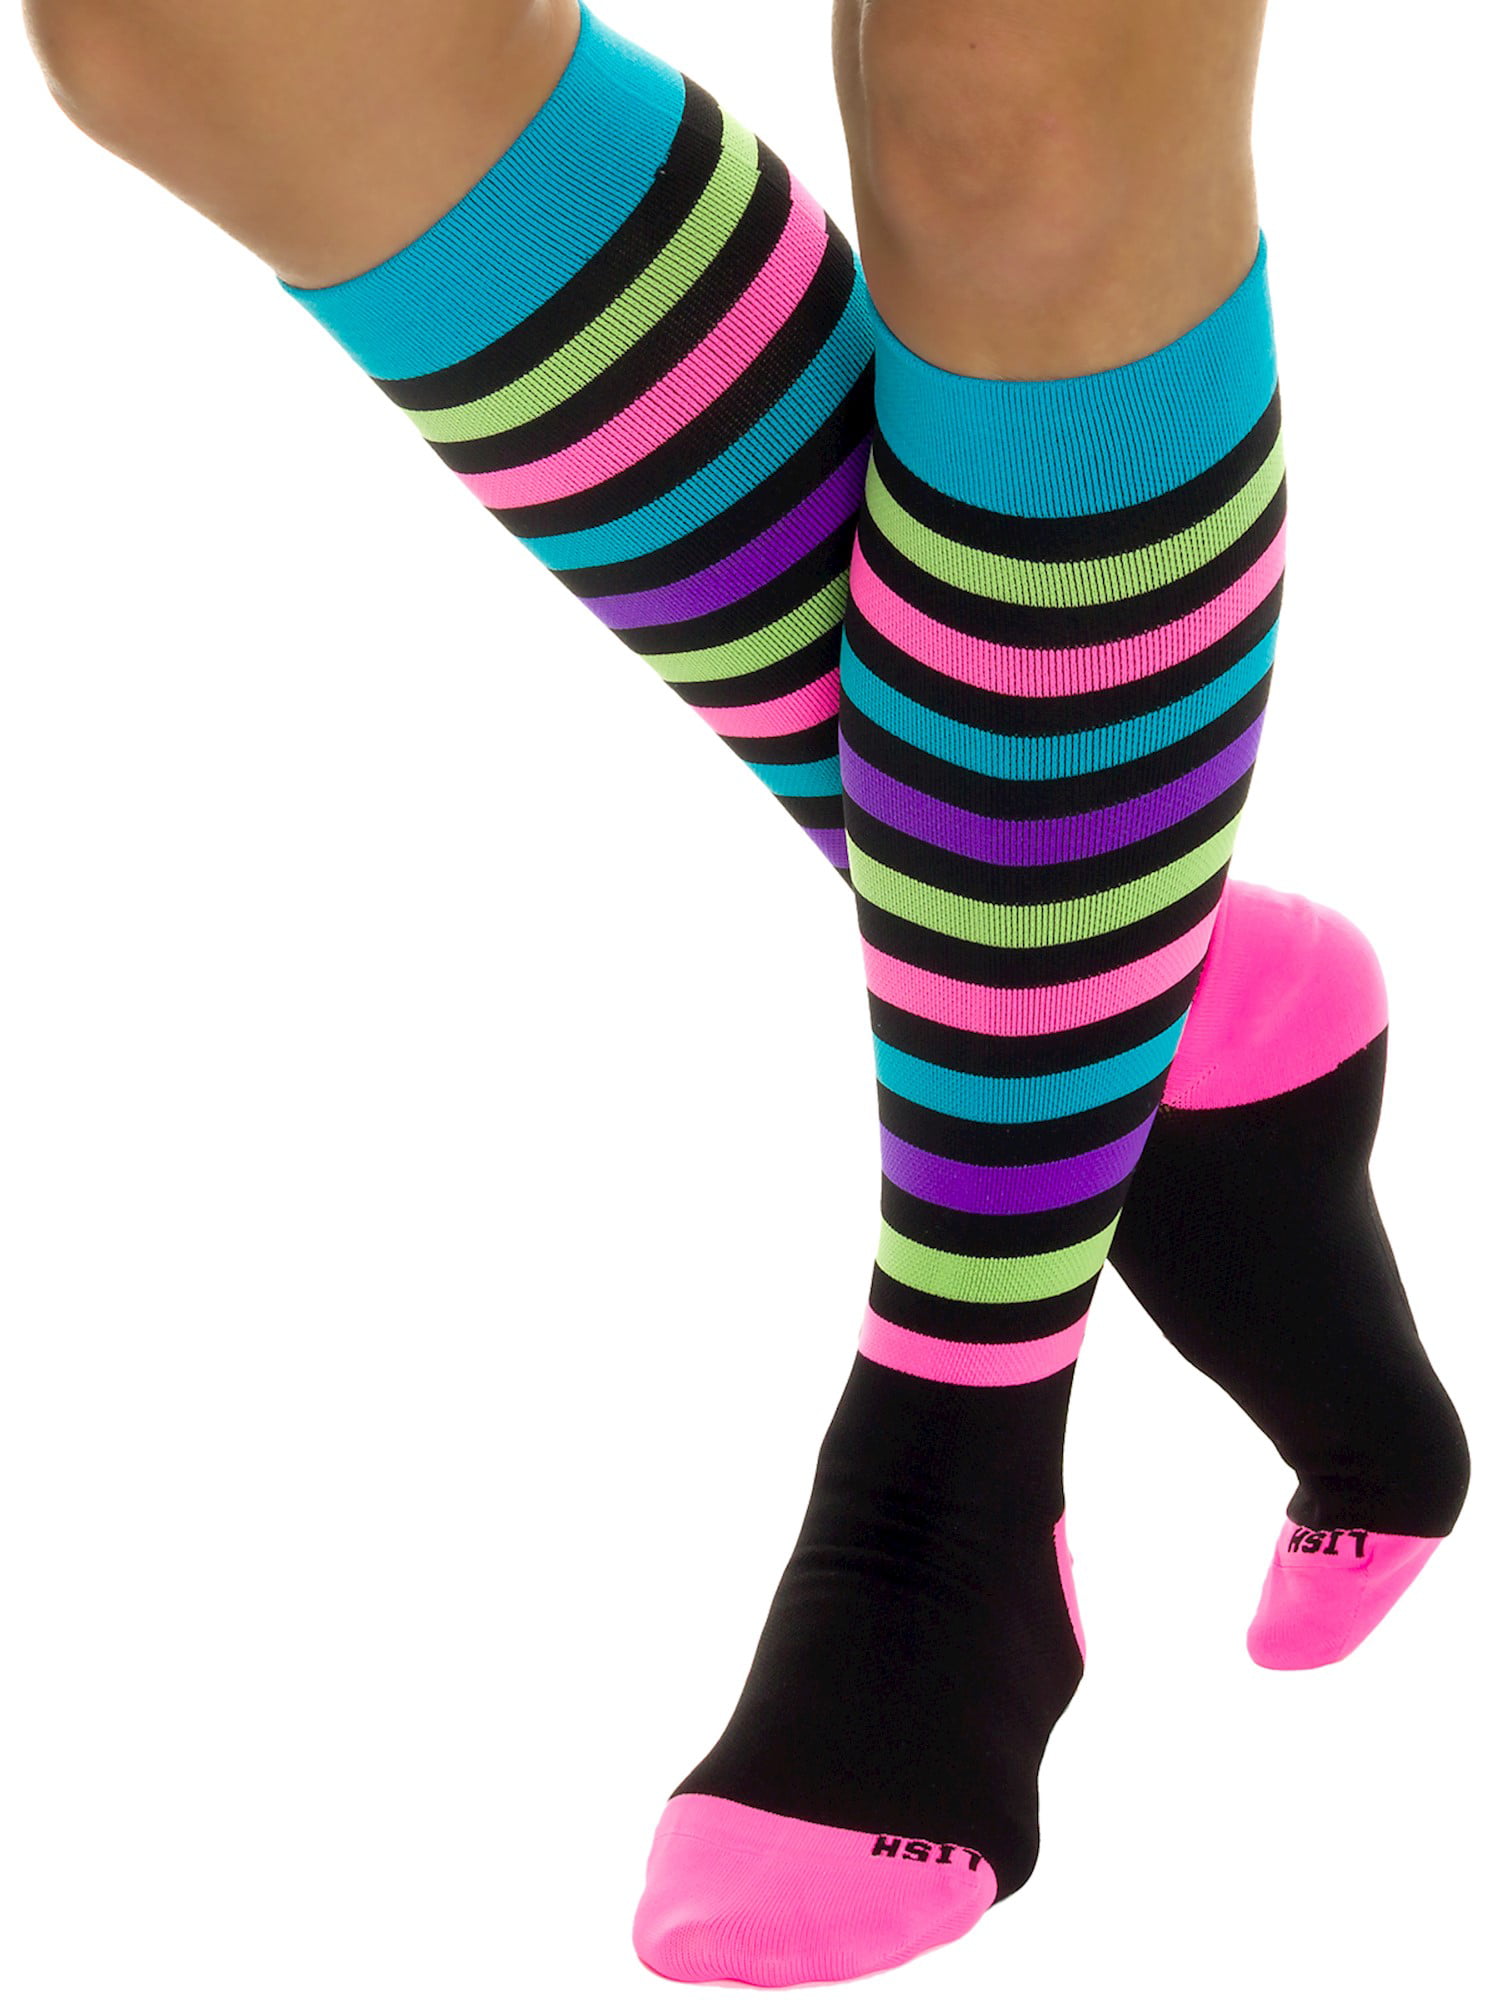 LISH Nurse Compression Socks for Women - Graduated 15-25mmHG - Sports